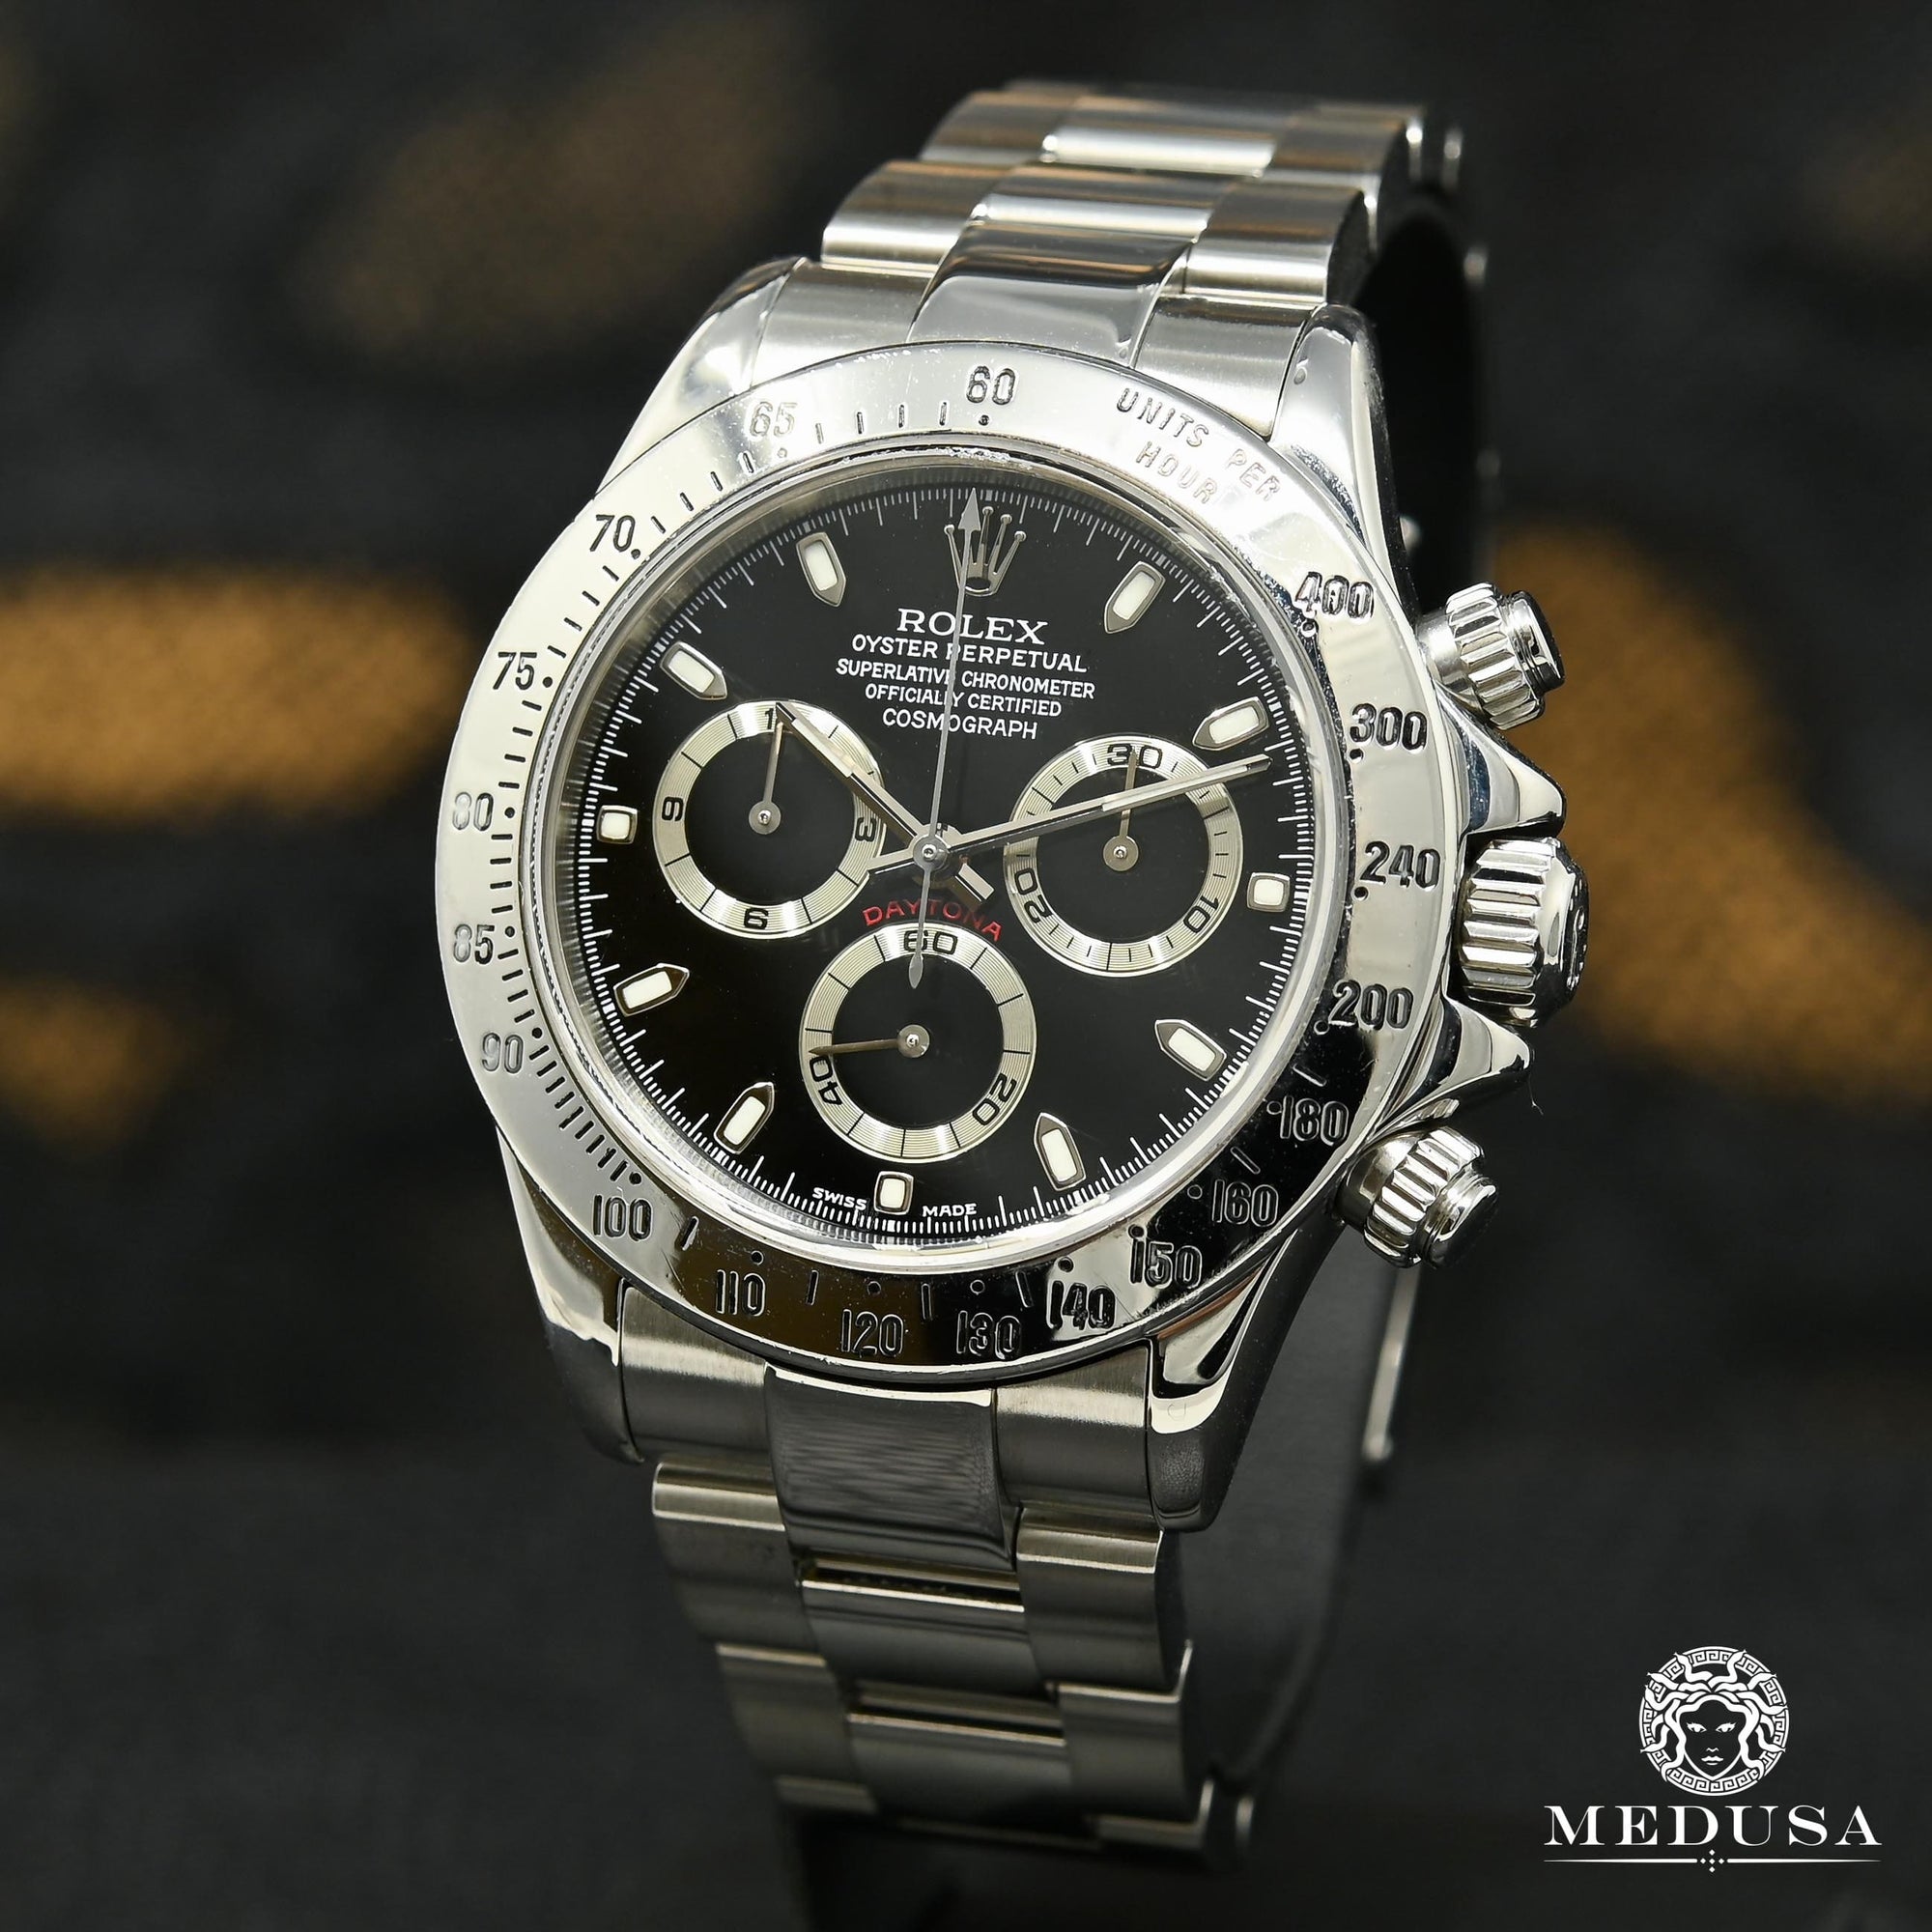 Rolex watch | Rolex Cosmograph Daytona 40mm Men's Watch - Black Stainless